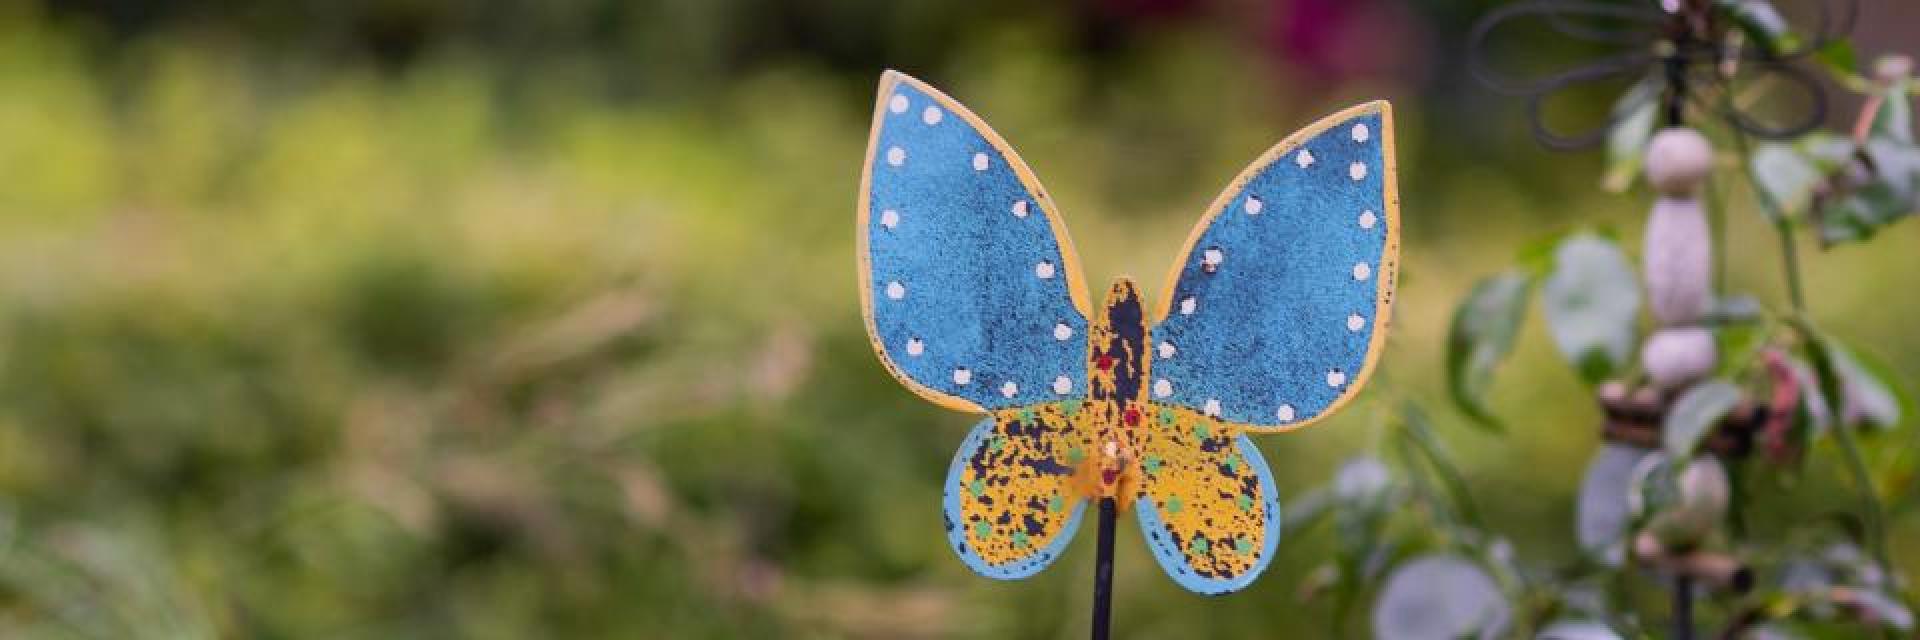 Symbolbild Schmetterling